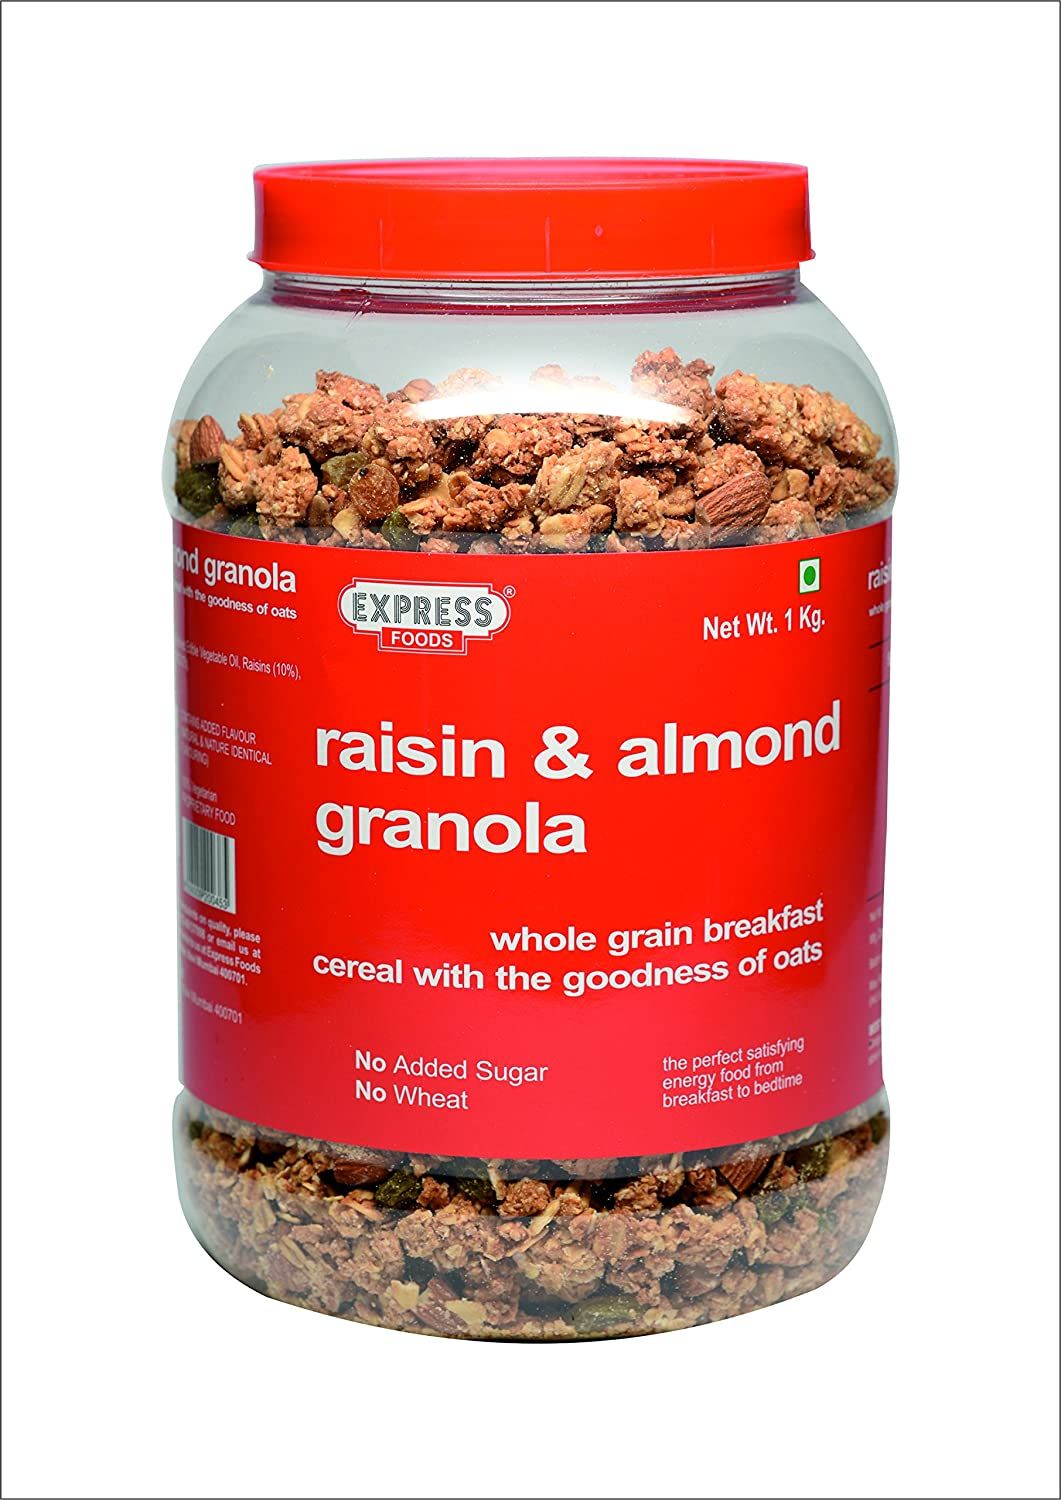 Express Foods Raisin & Almond Granola Image